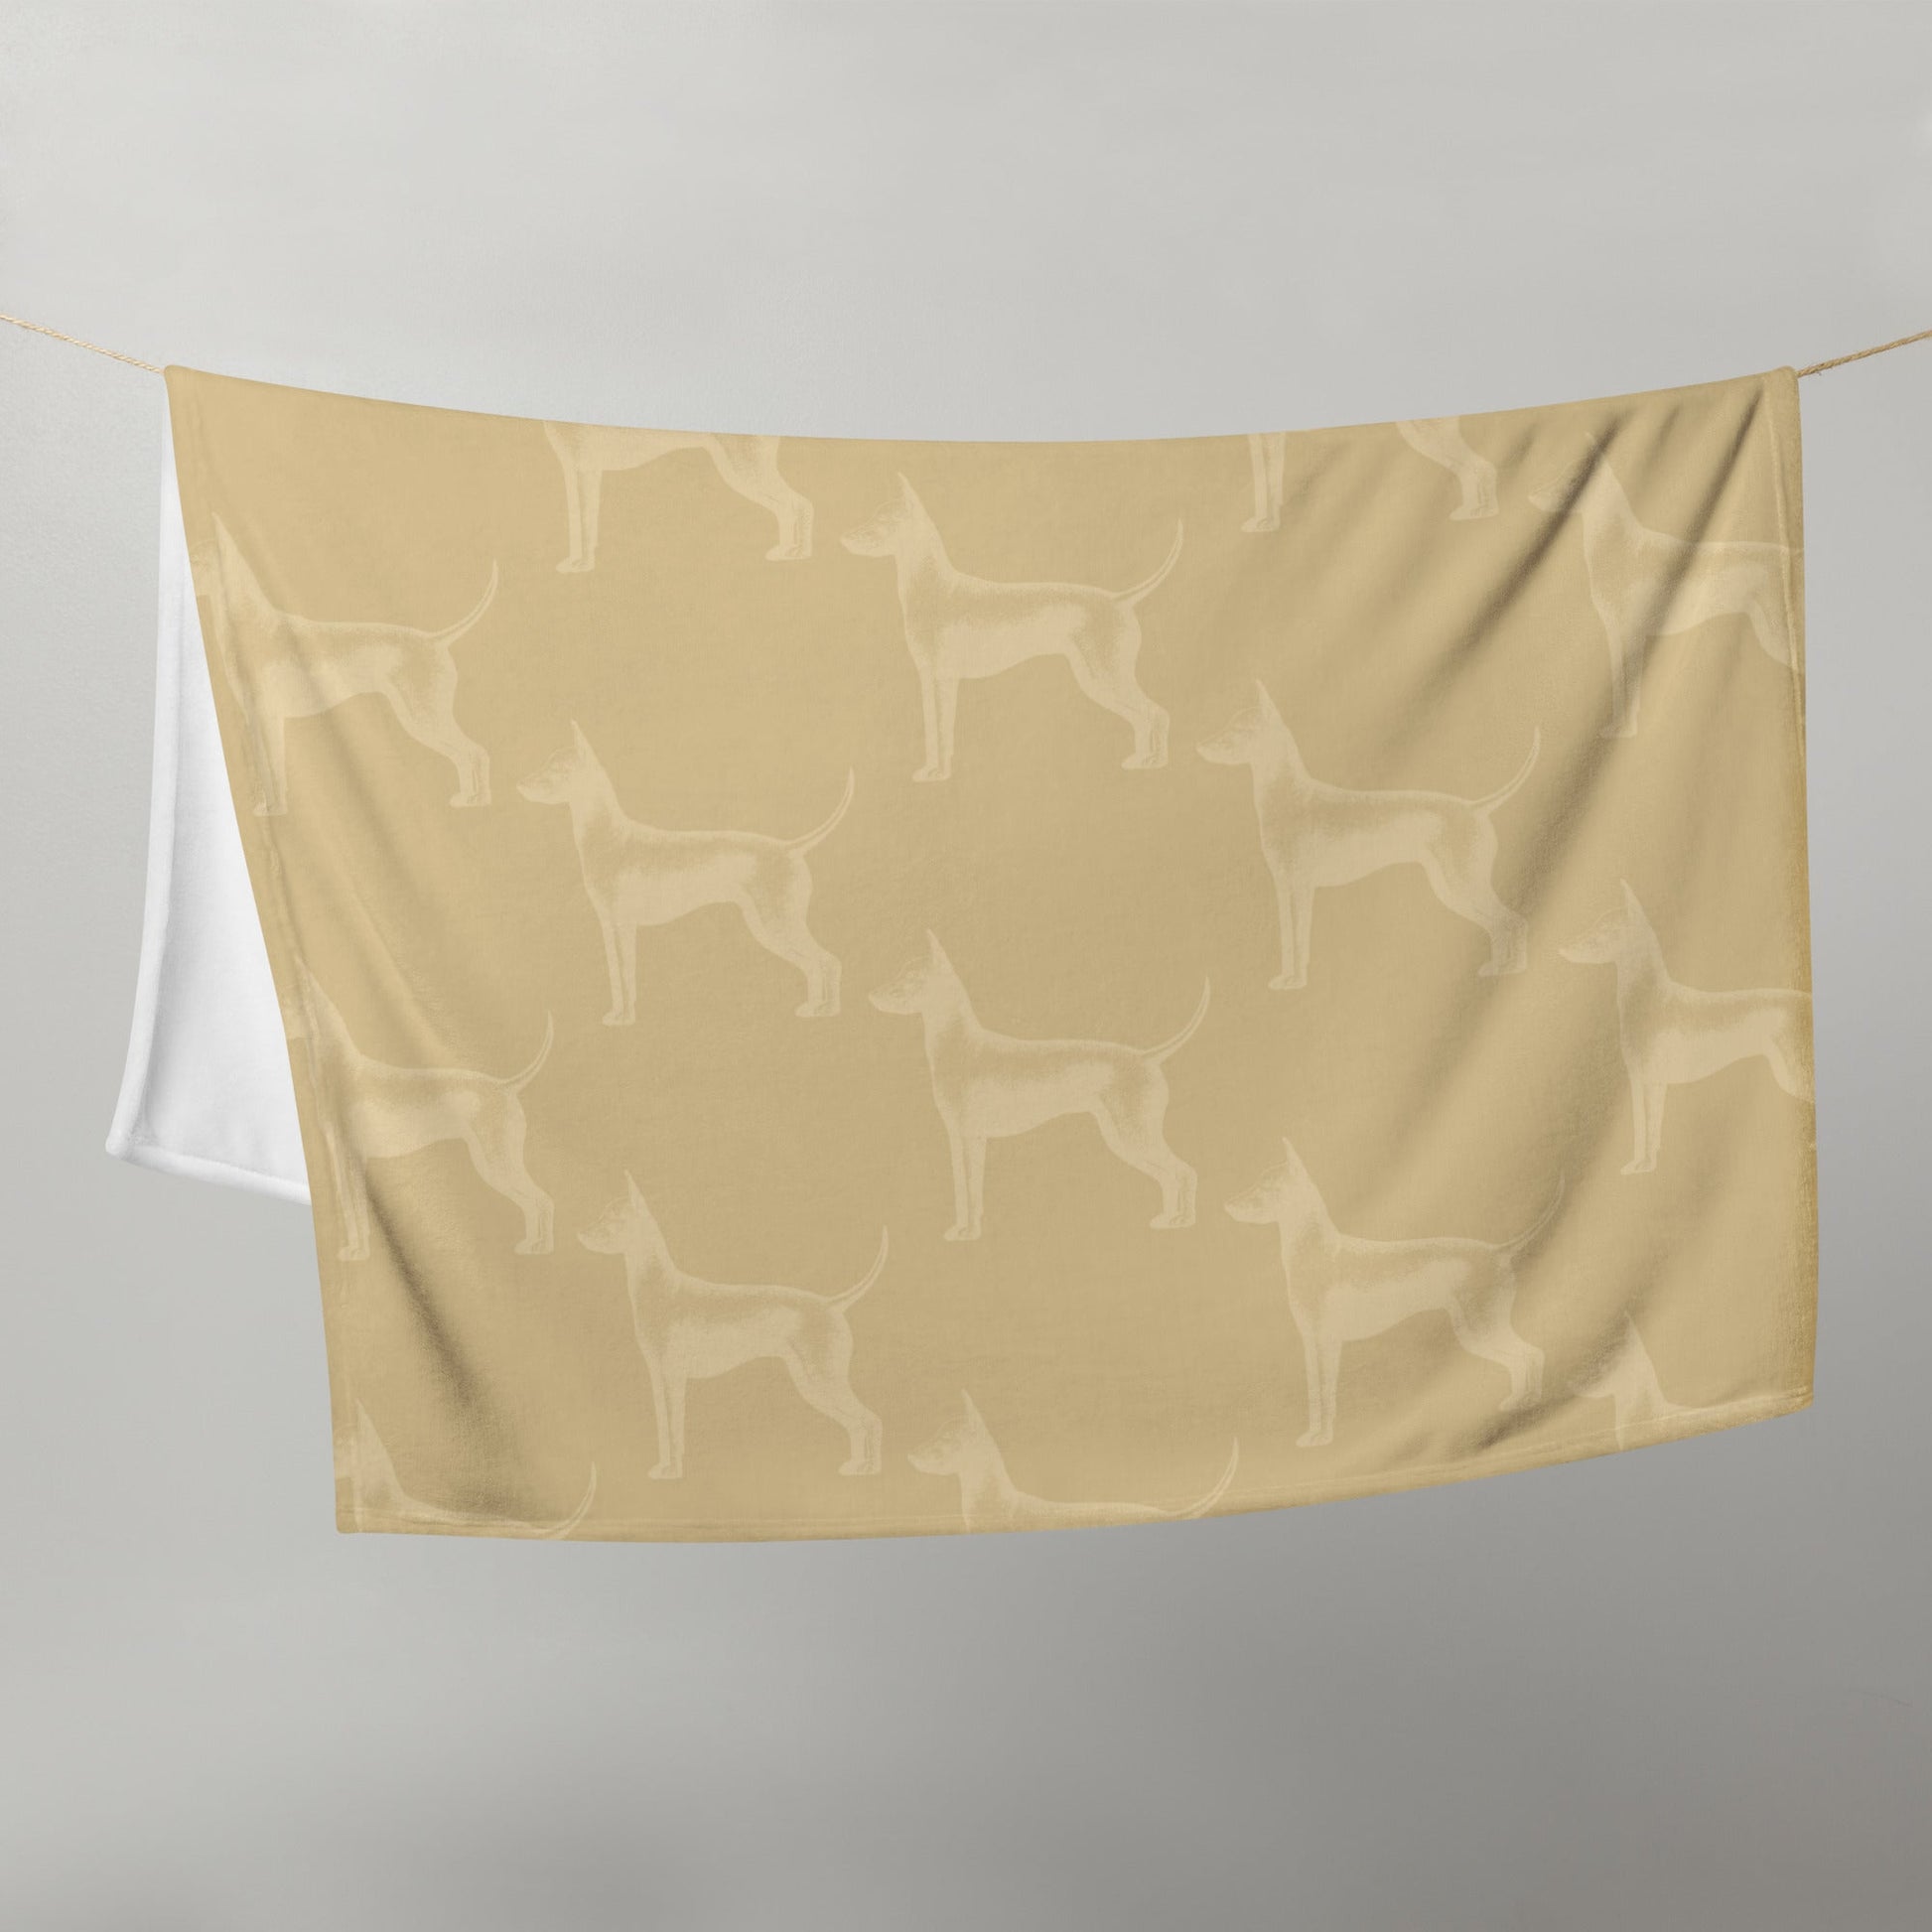 Tan Dog Lovers Throw Blanket-DoggyLoveandMore